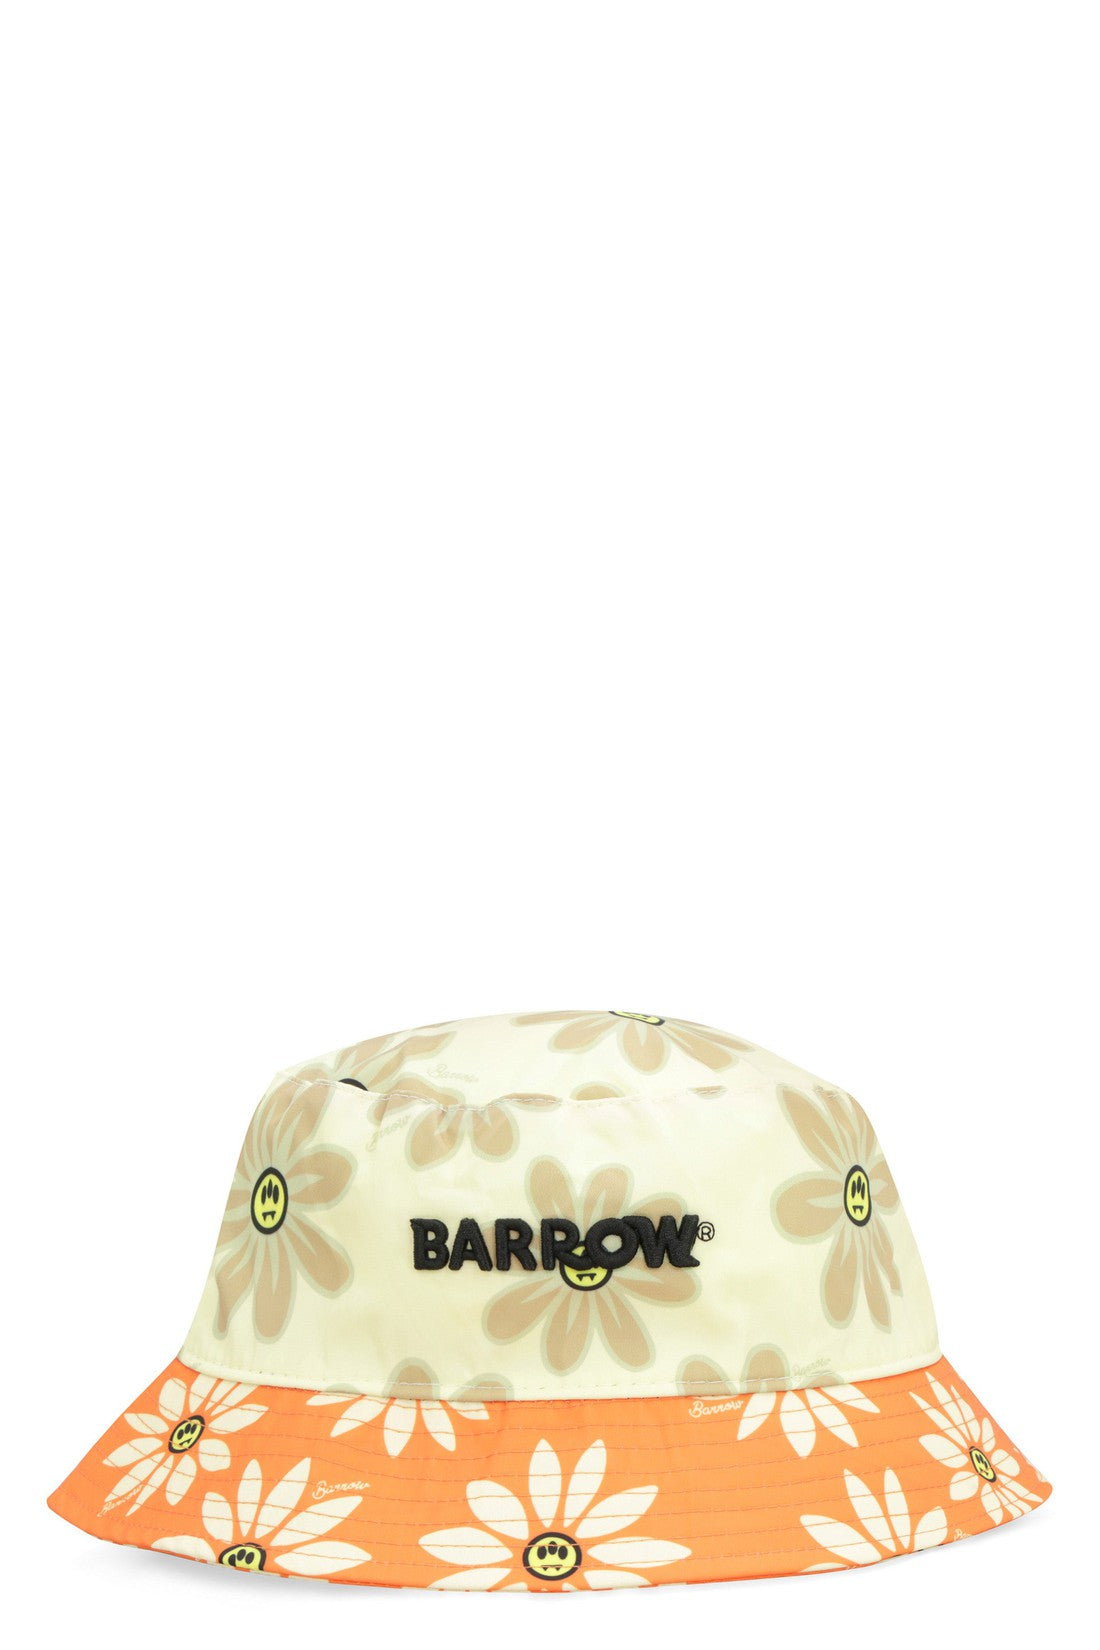 Barrow-OUTLET-SALE-Bucket hat-ARCHIVIST